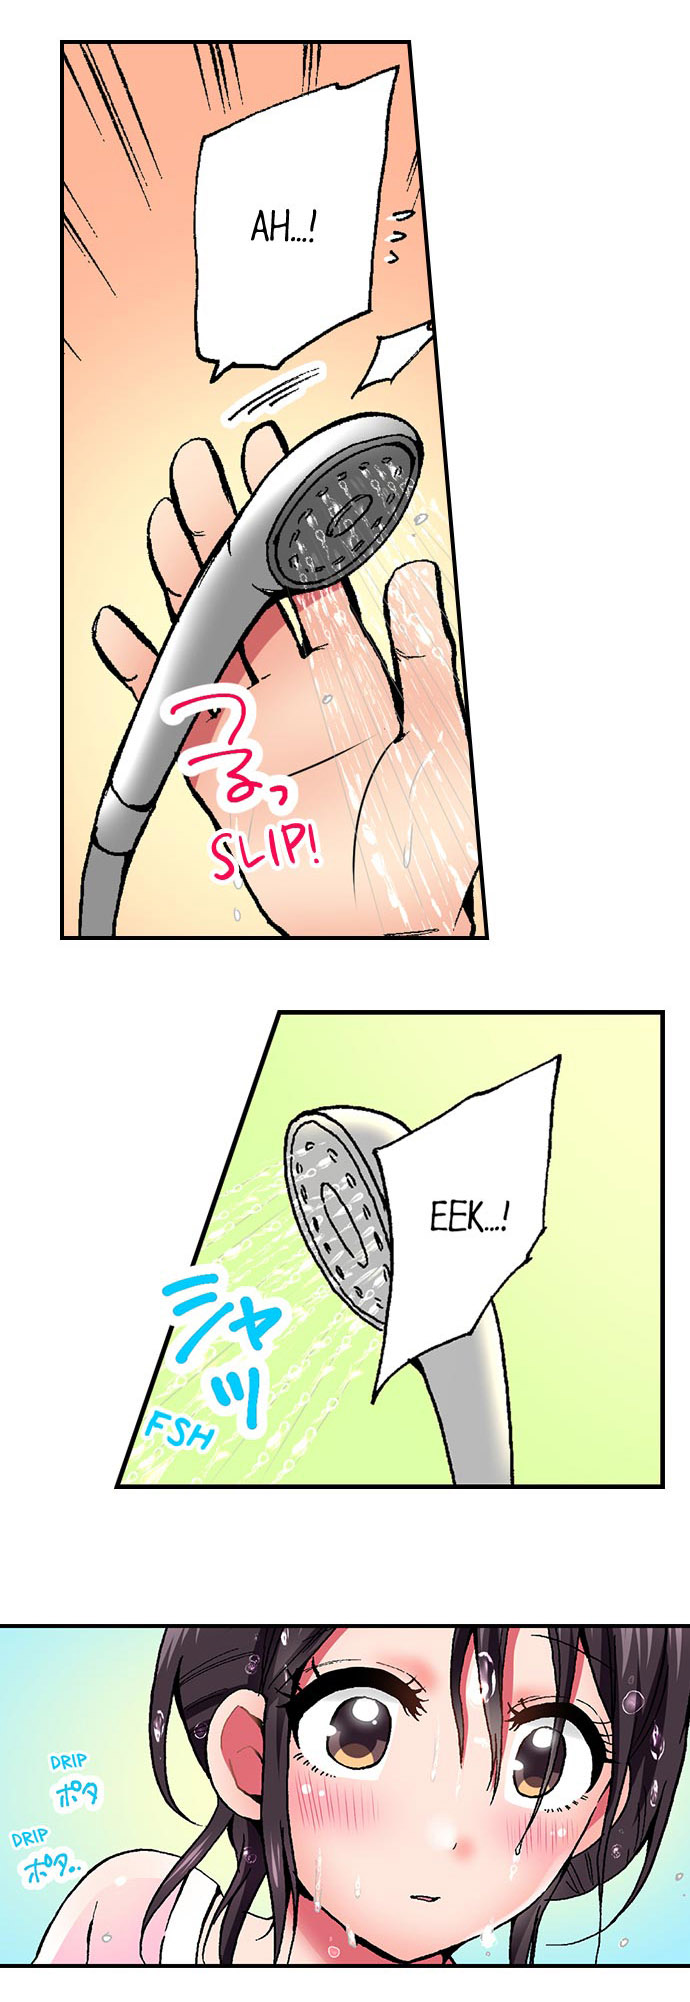 [Yukikuni] Pranking the Working Nurse Ch.9/? [English] [Hentai Universe]